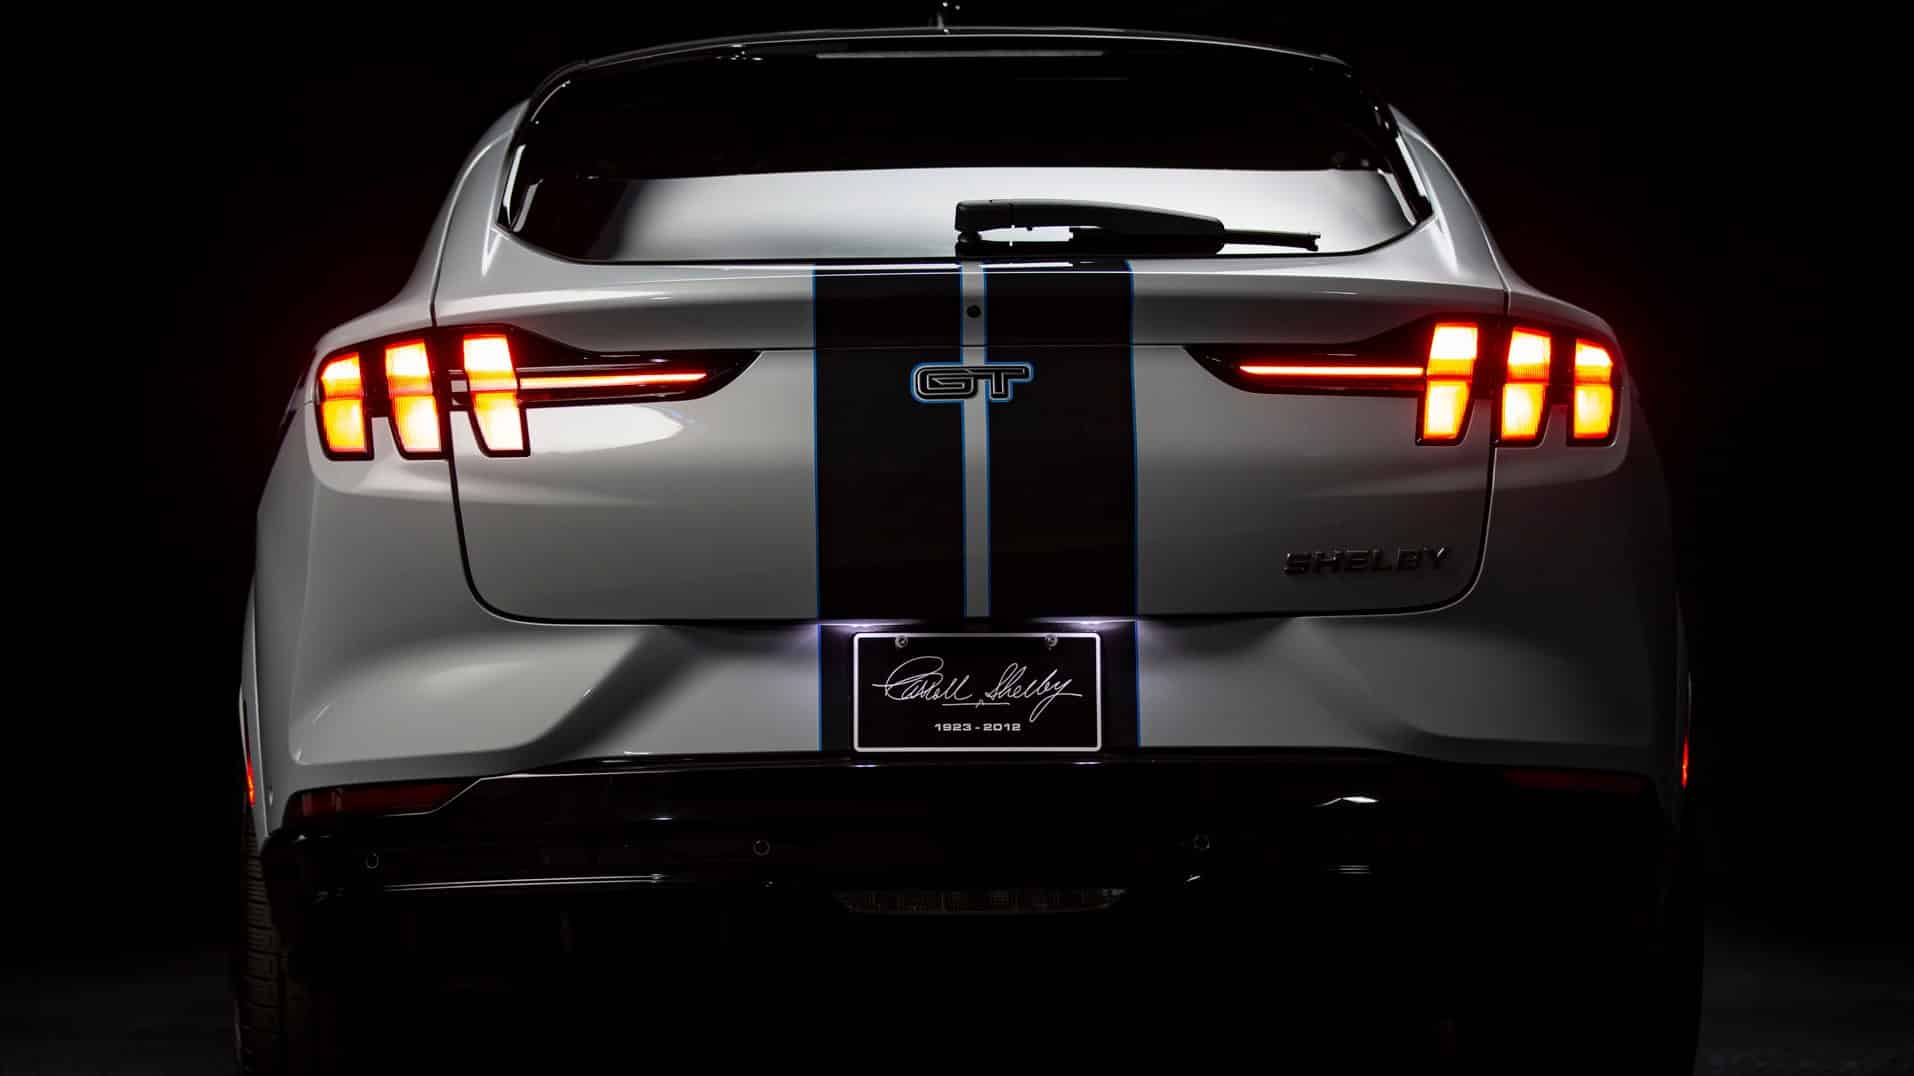 Shelby Mustang Mach-E GT